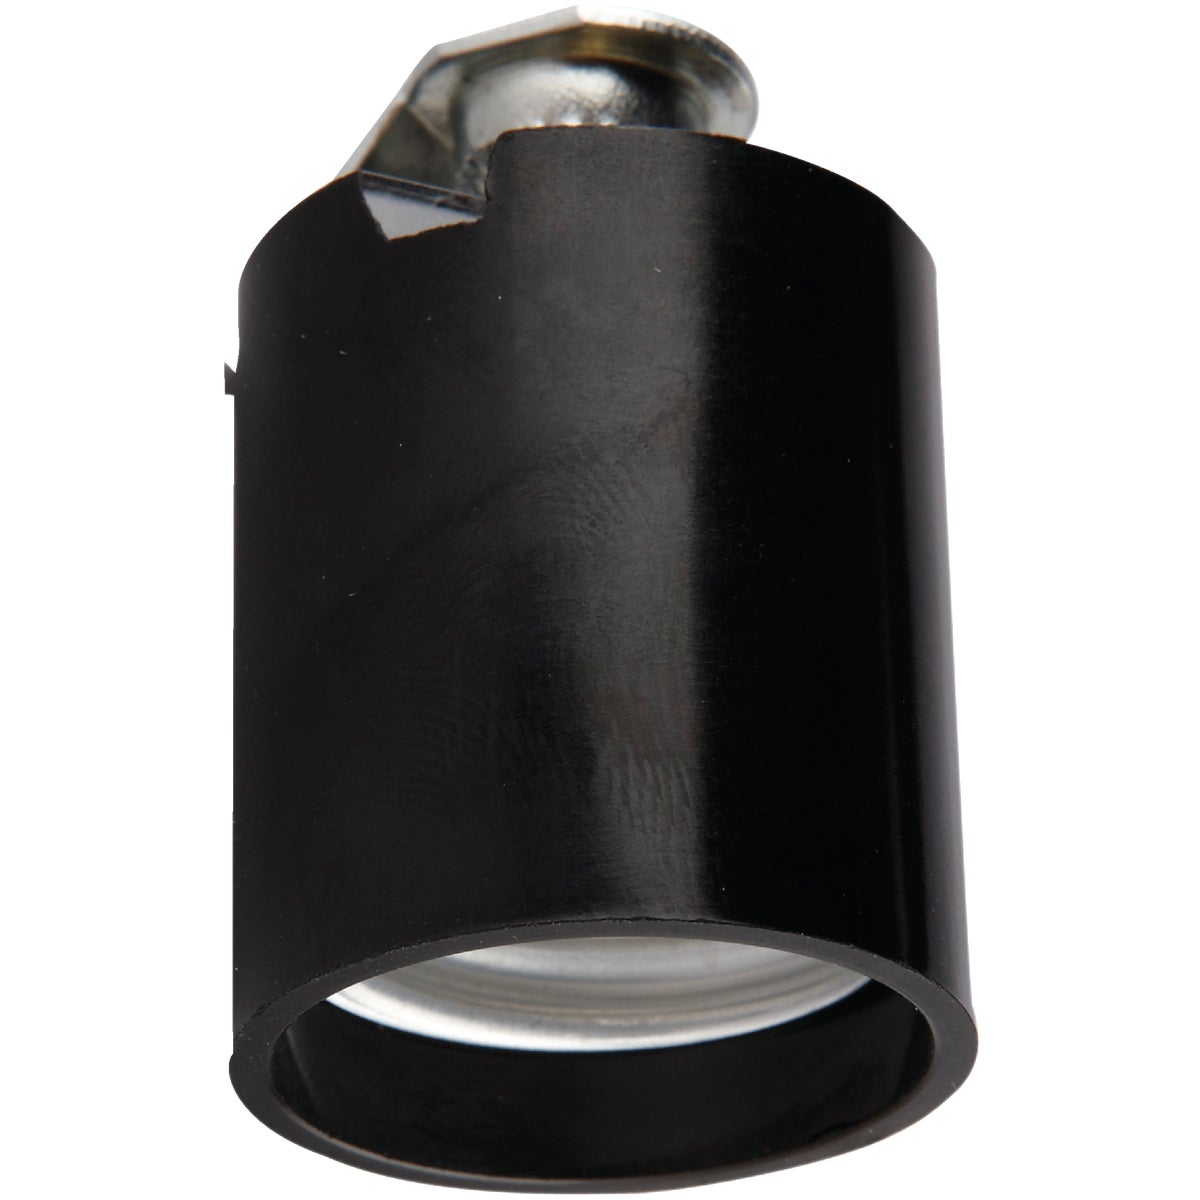 Item 513616, Medium base, 1-piece, keyless incandescent lampholder.